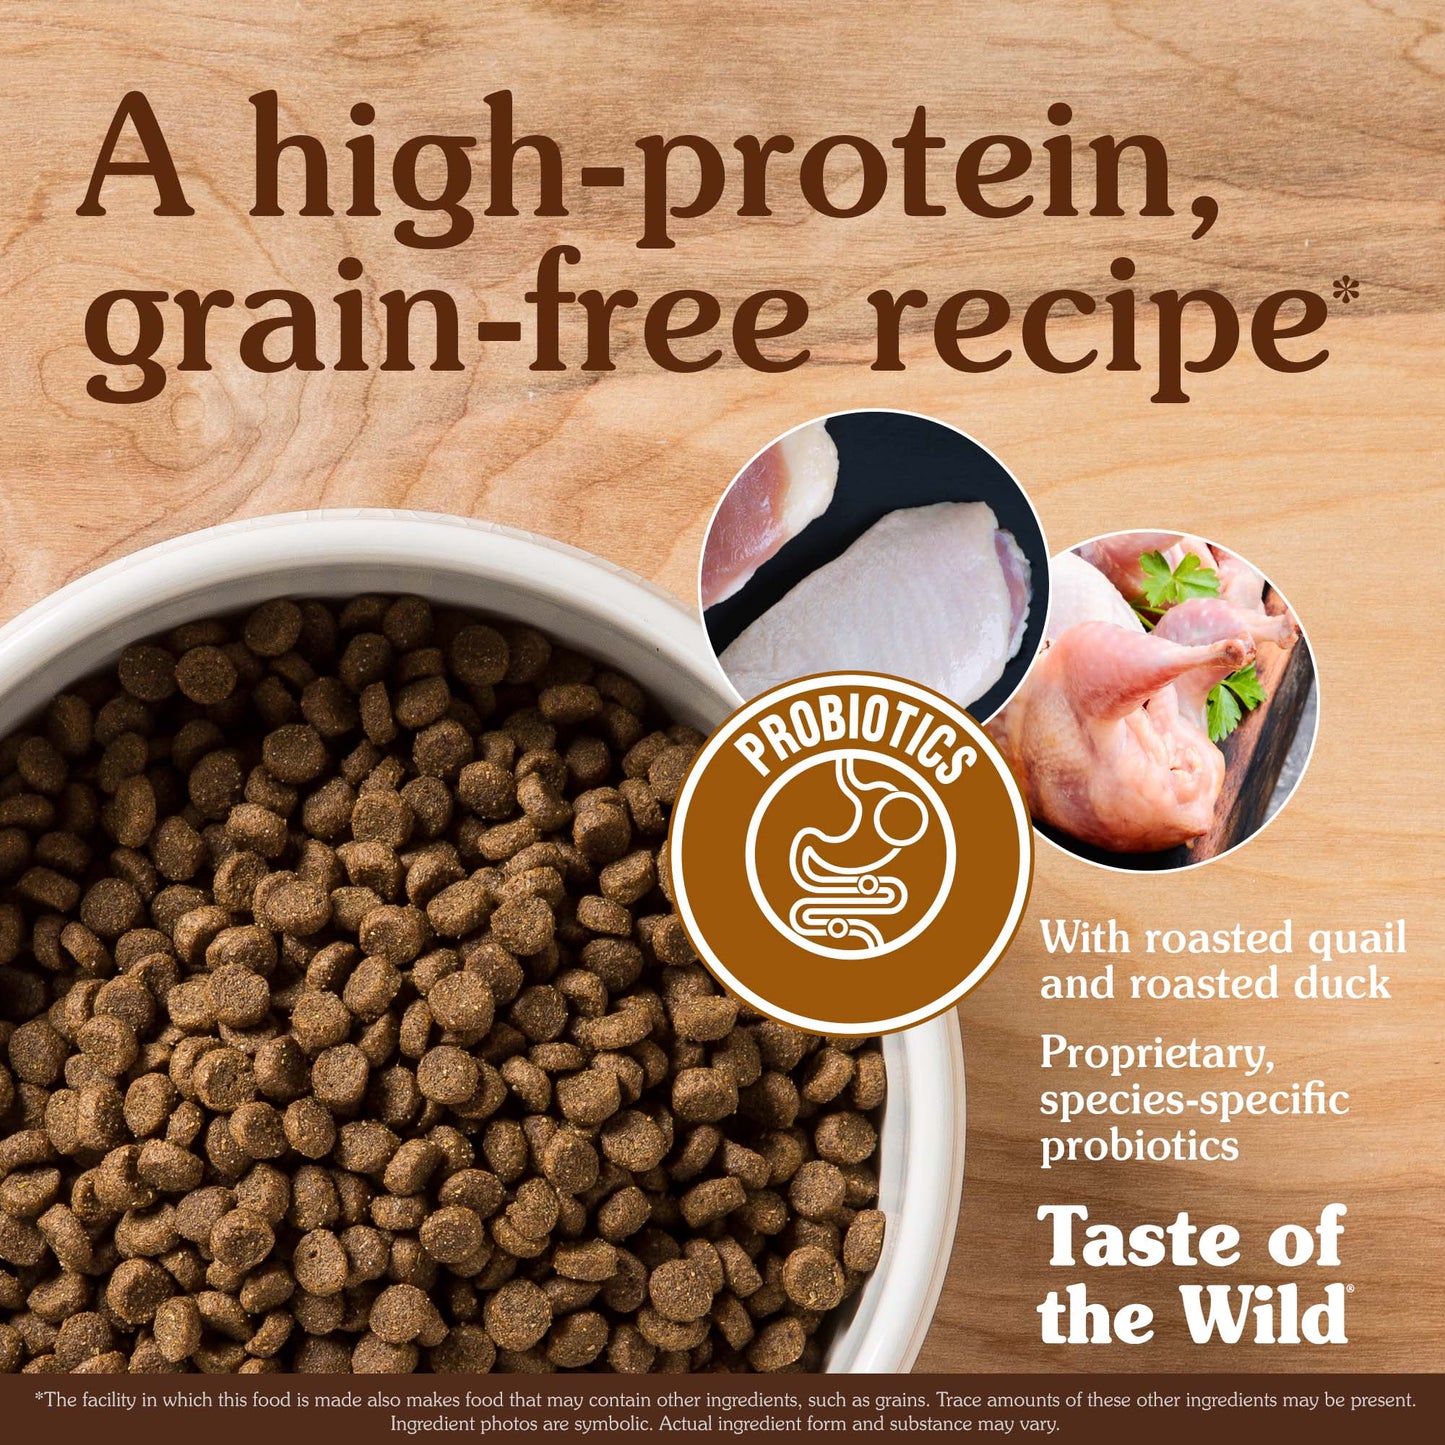 Taste of the Wild Lowland Creek Feline Recipe - Pet Merit StoreTaste of the Wild Lowland Creek Feline Recipe